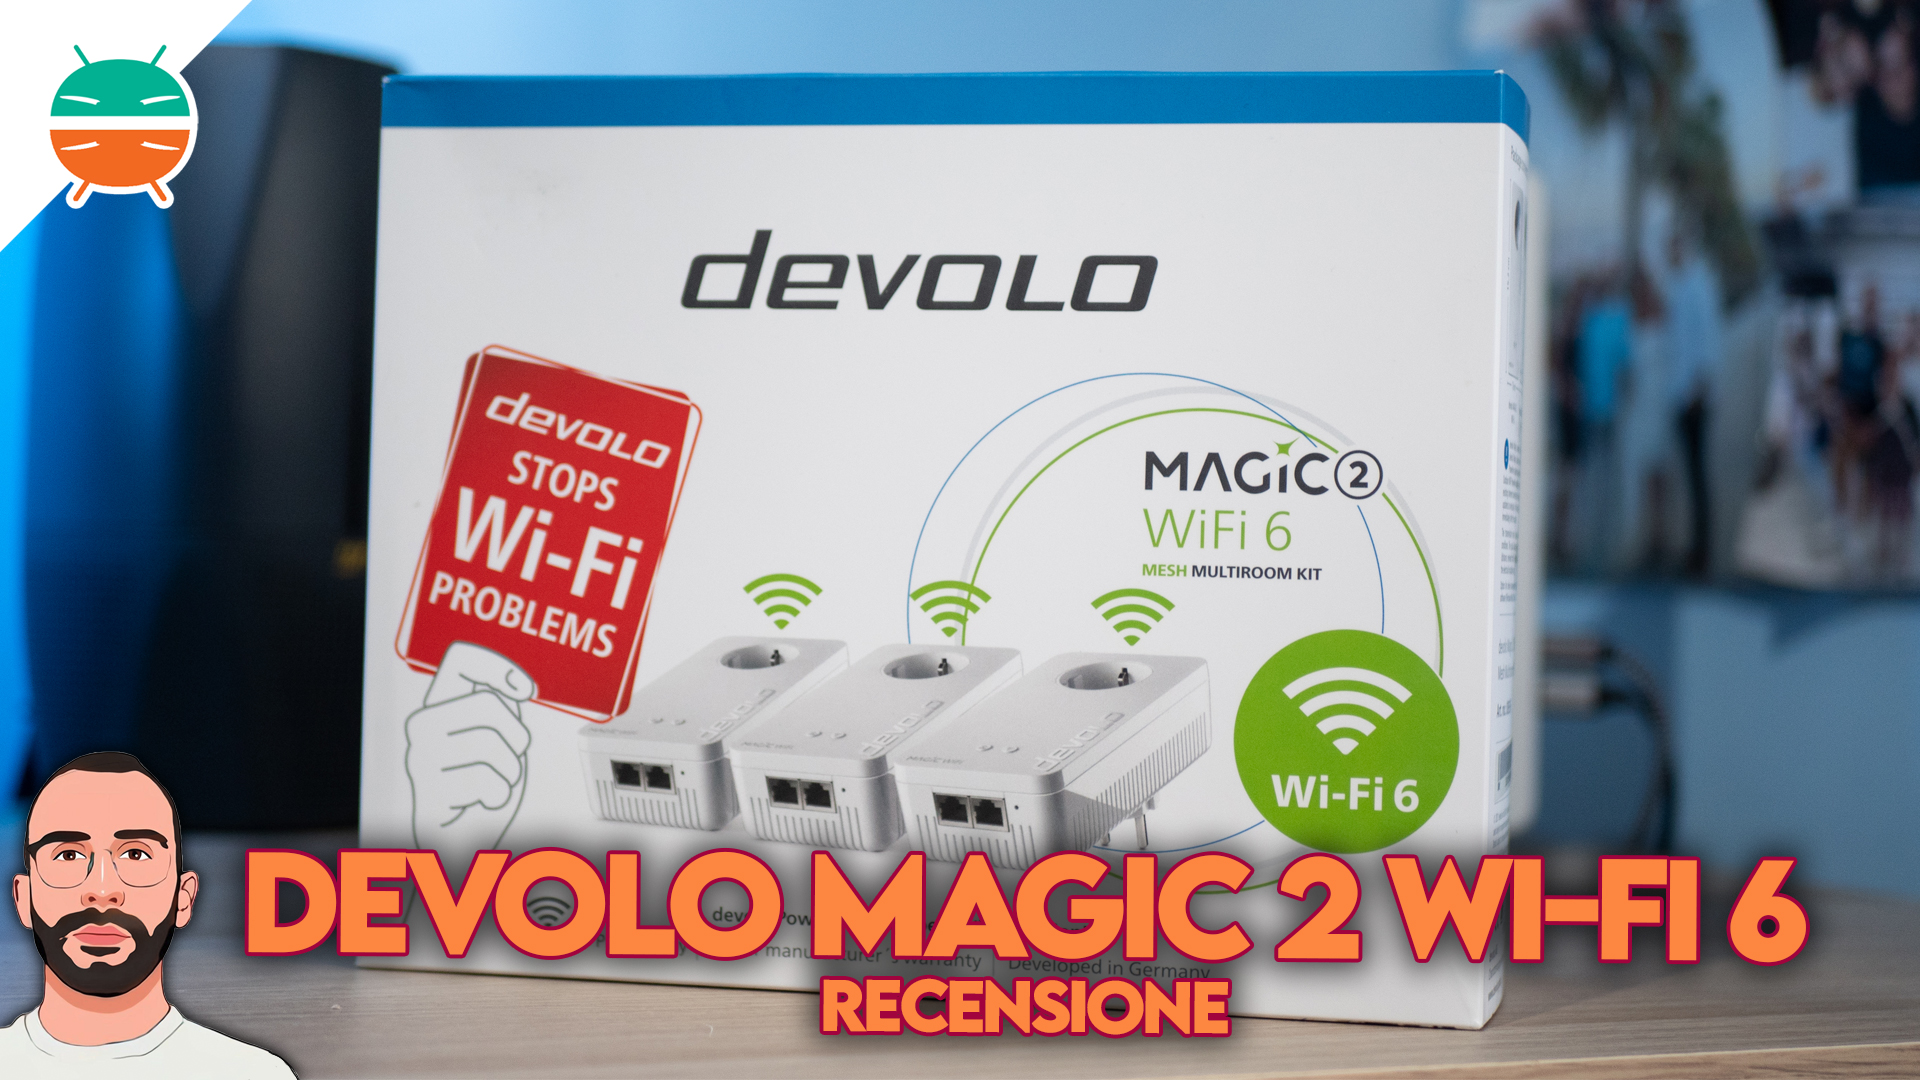 DEVOLO Magic 2 Wi-FI 6 review: goodbye home Wi-Fi problems - GizChina.it